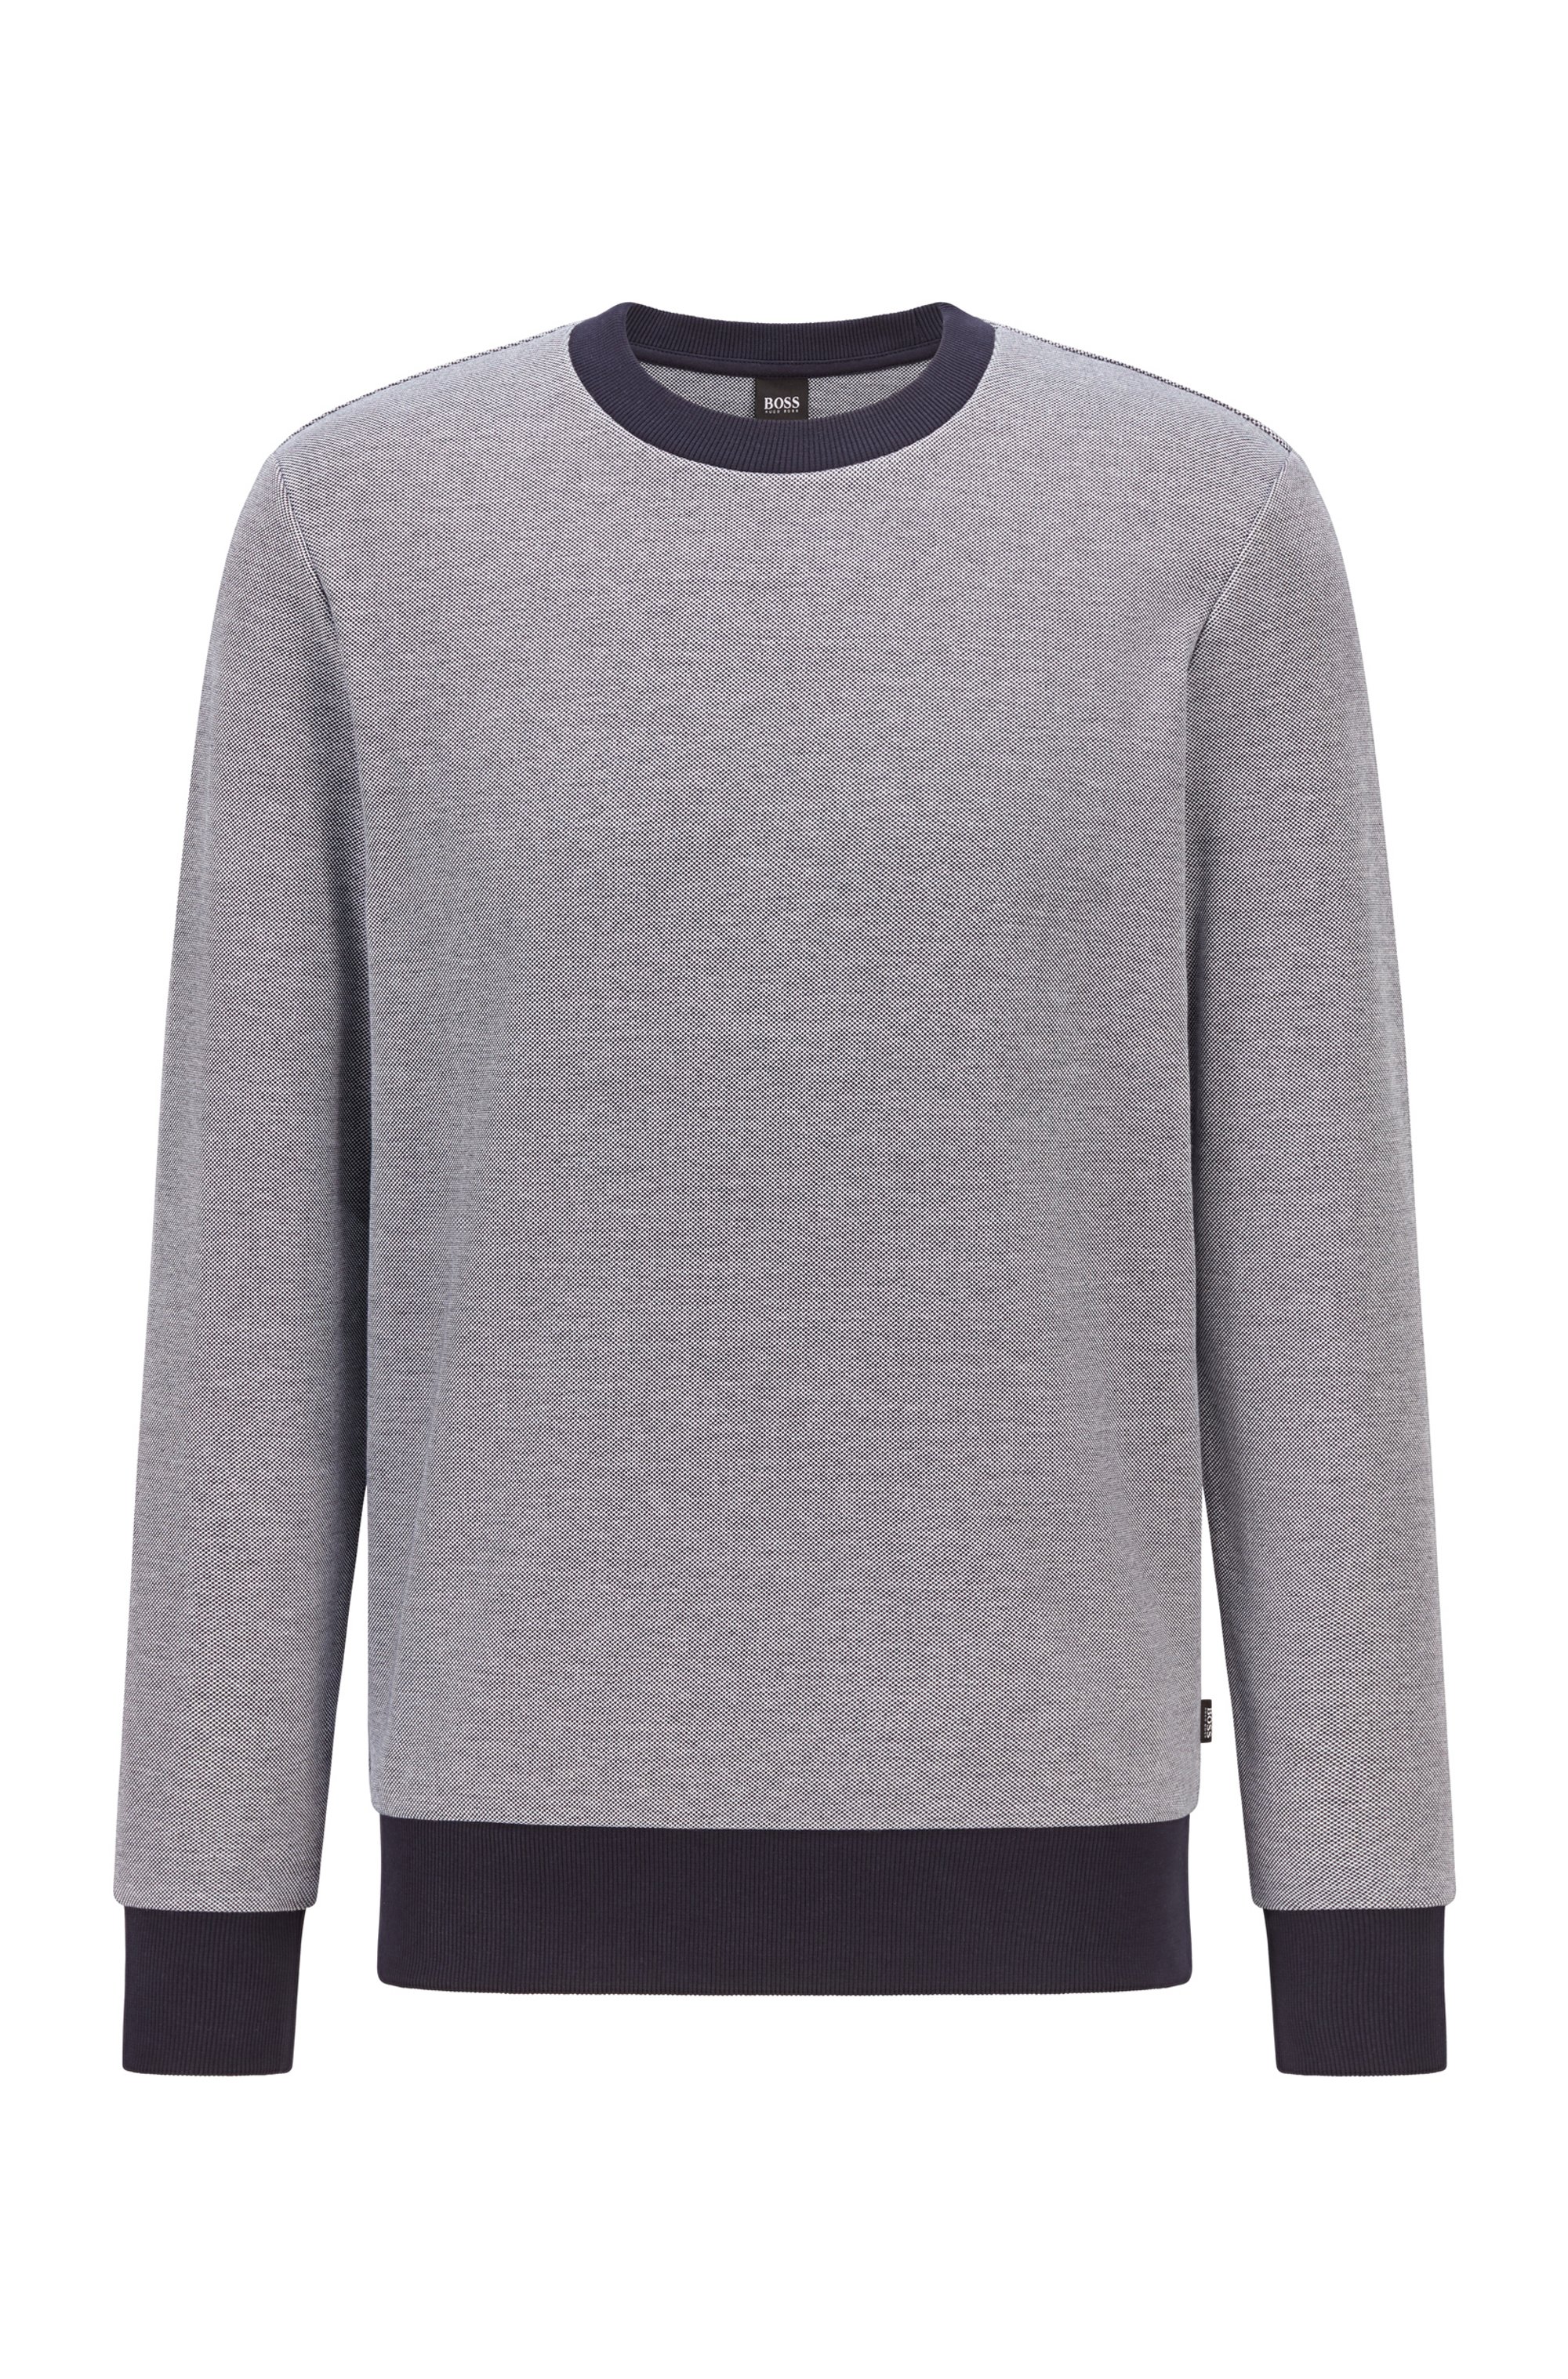 Cotton-blend sweatshirt in double-knit jacquard, Dark Blue